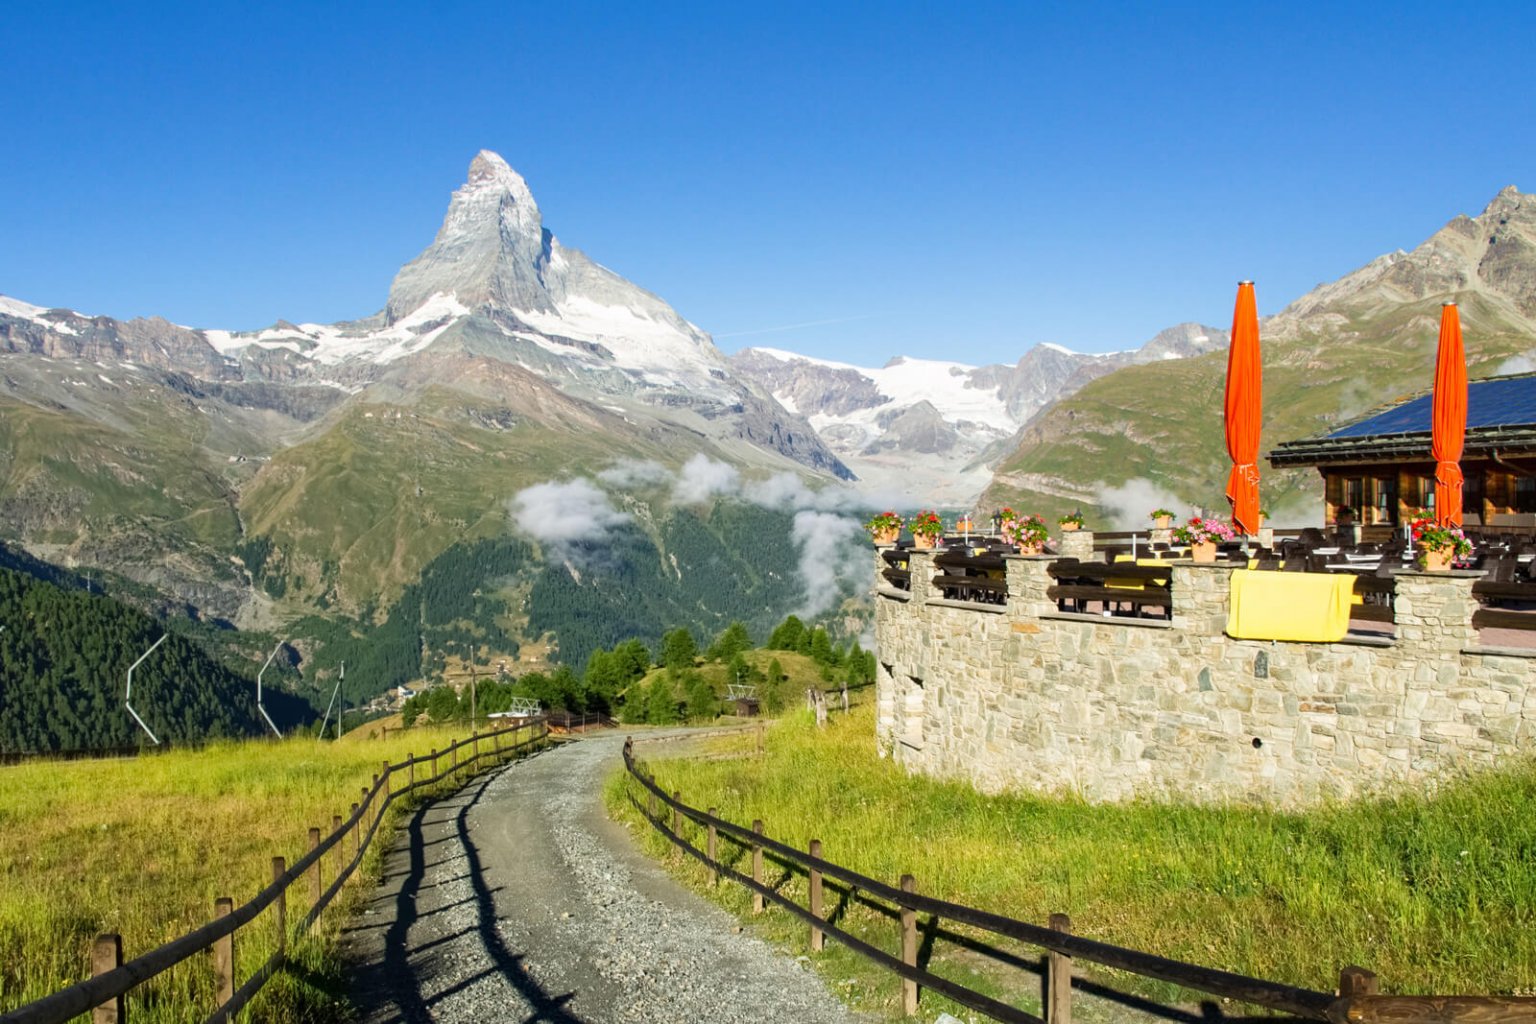 A foodie's guide to mountain restaurants in Zermatt